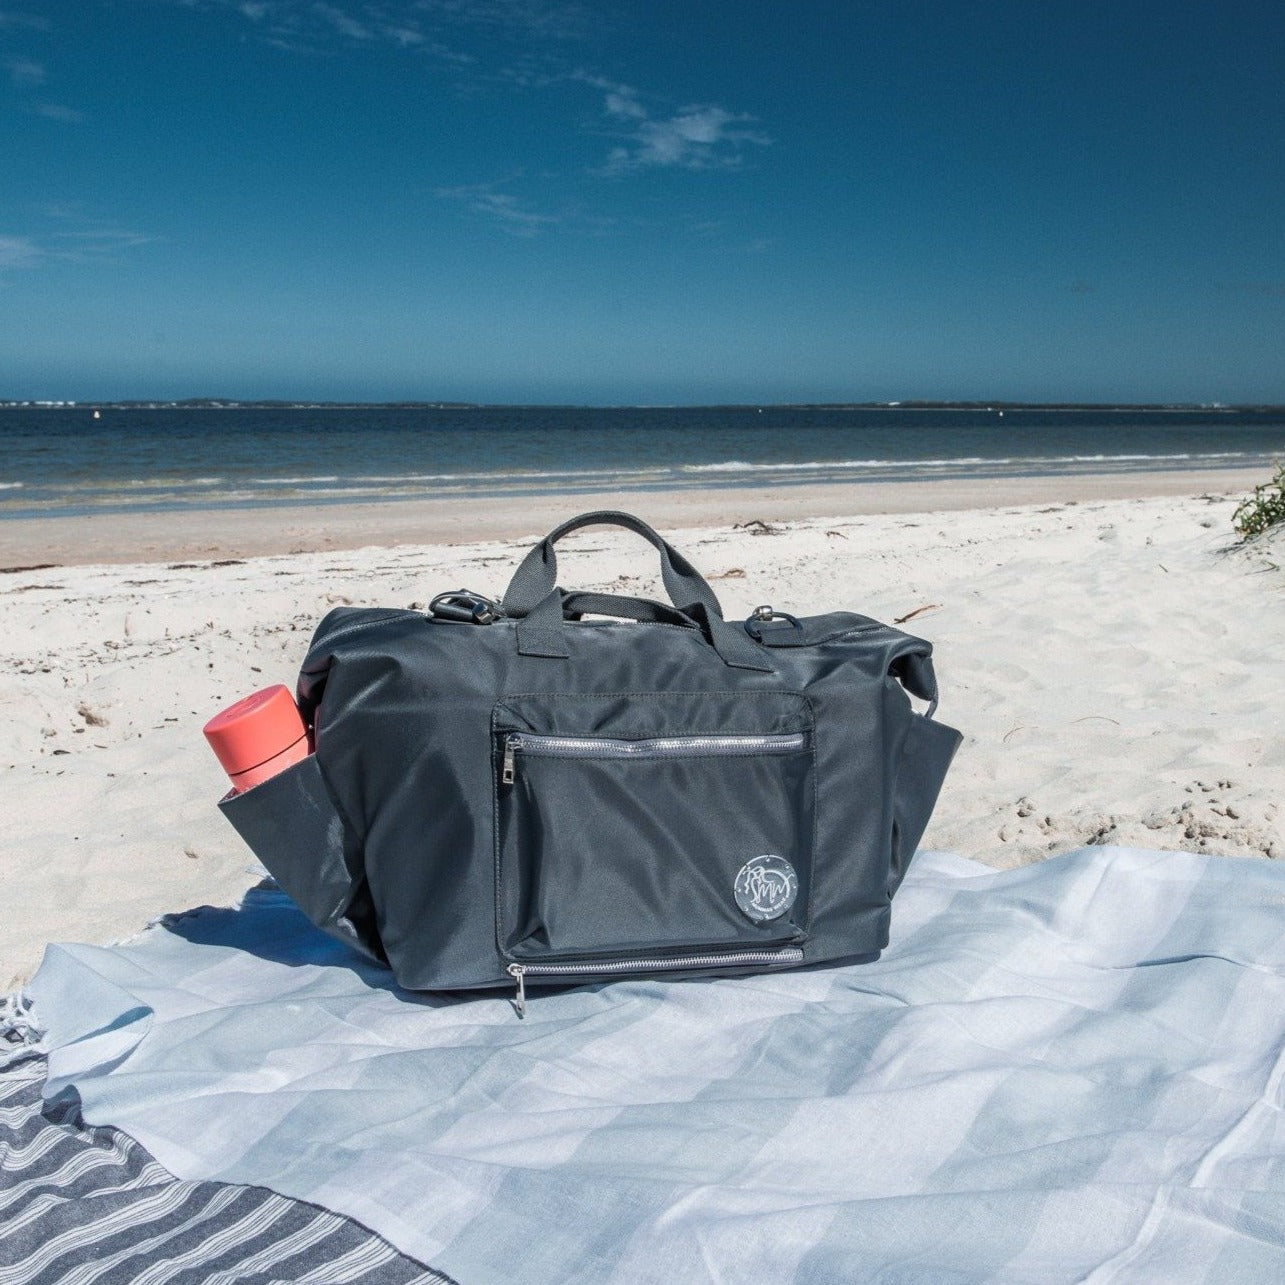 alt="Mummas Wear The DUFFLE All In One Nappy Bag packed as beach bag" 